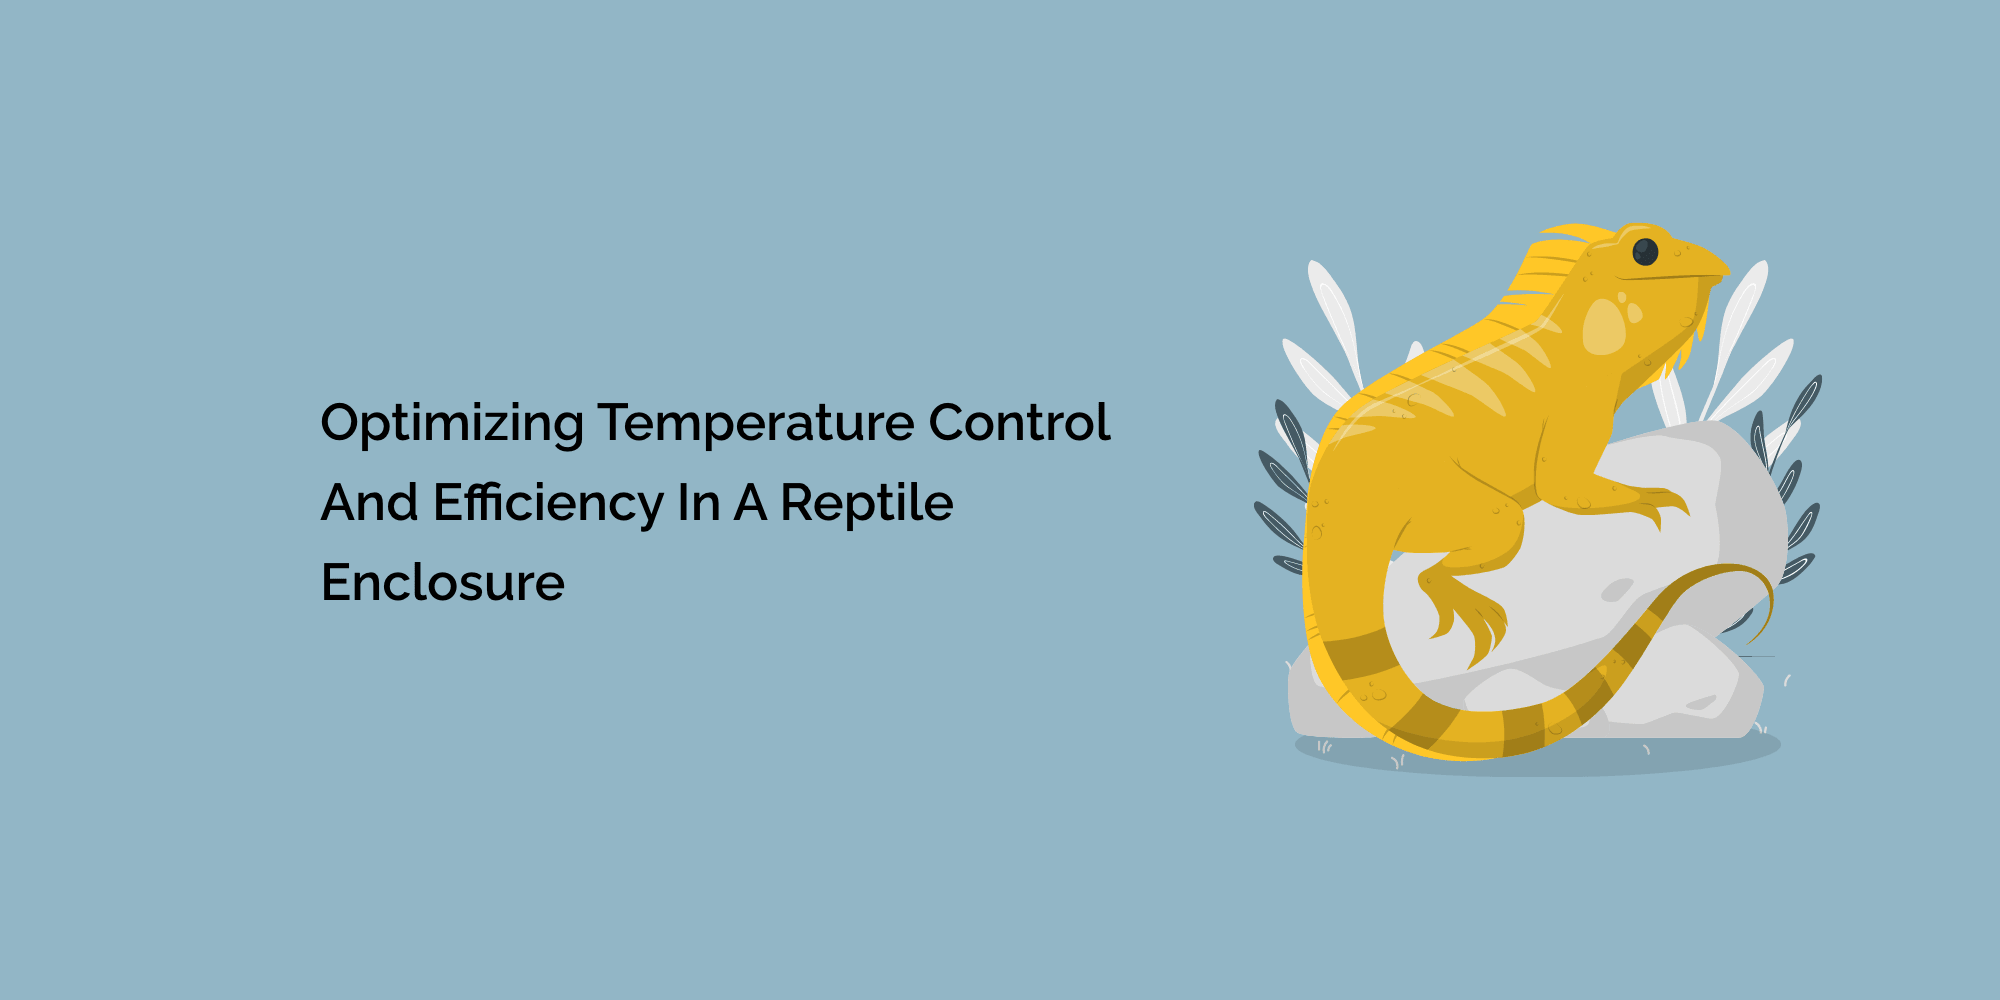 Optimizing Temperature Control and Efficiency in a Reptile Enclosure